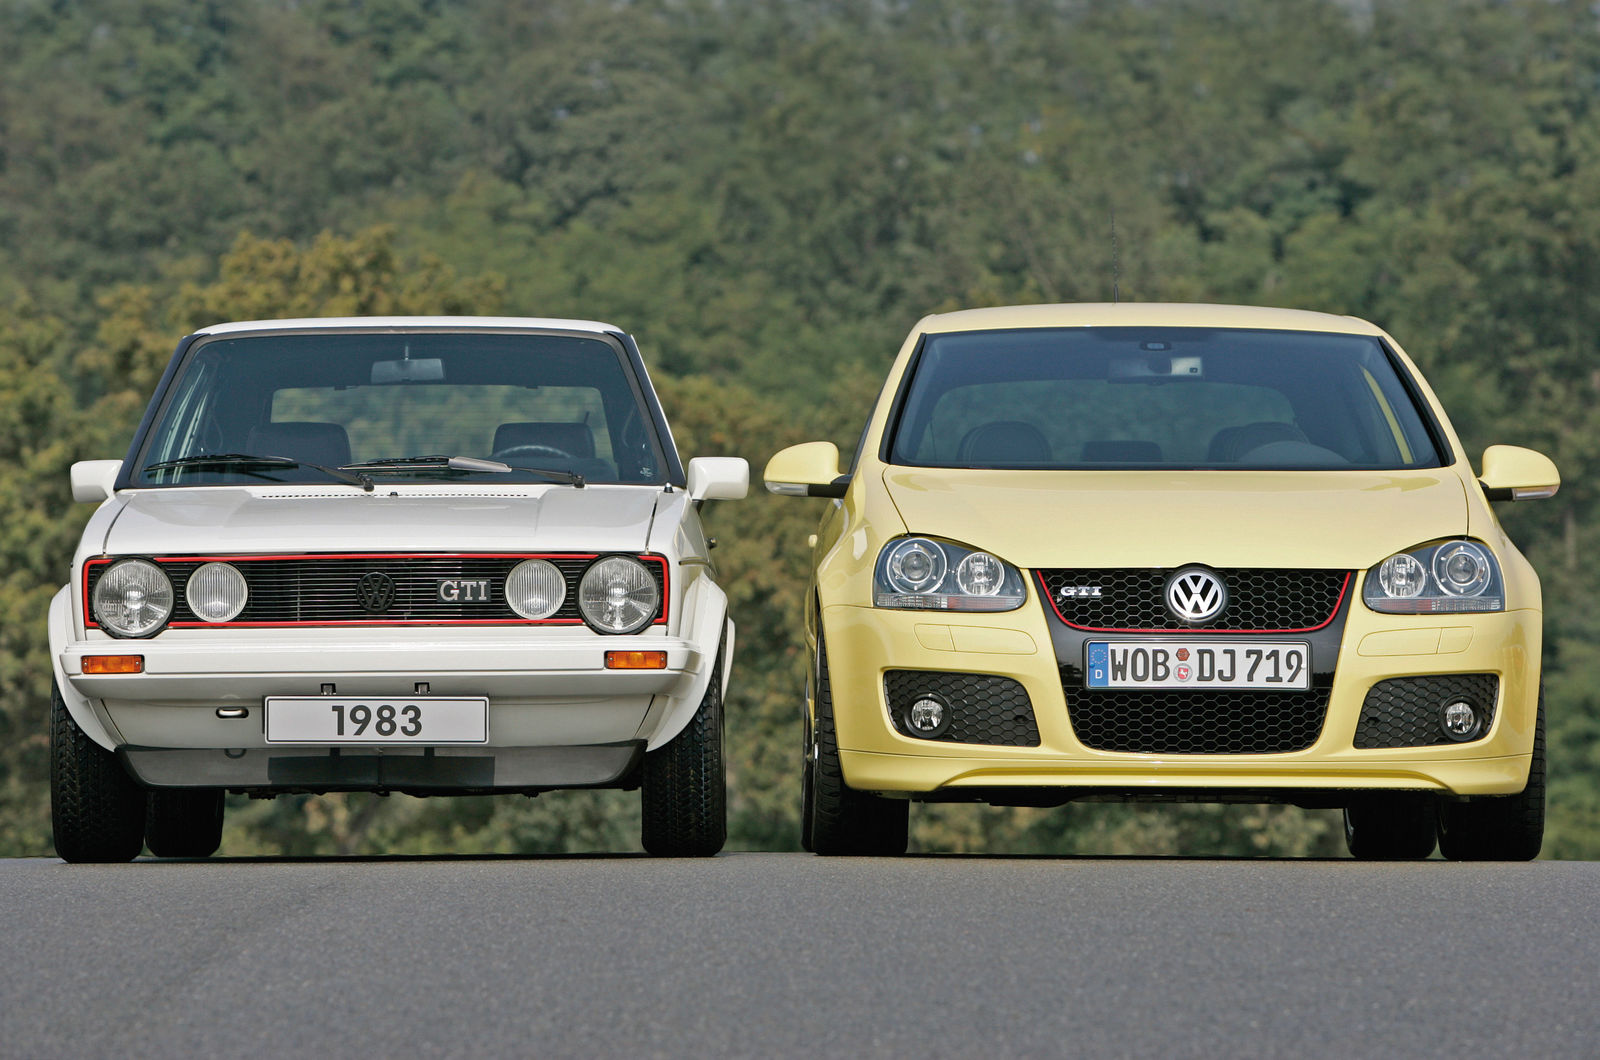 Generations - Volkswagen Original GTI Pirelli of 1983 and the new Volkswagen GTI Pirelli